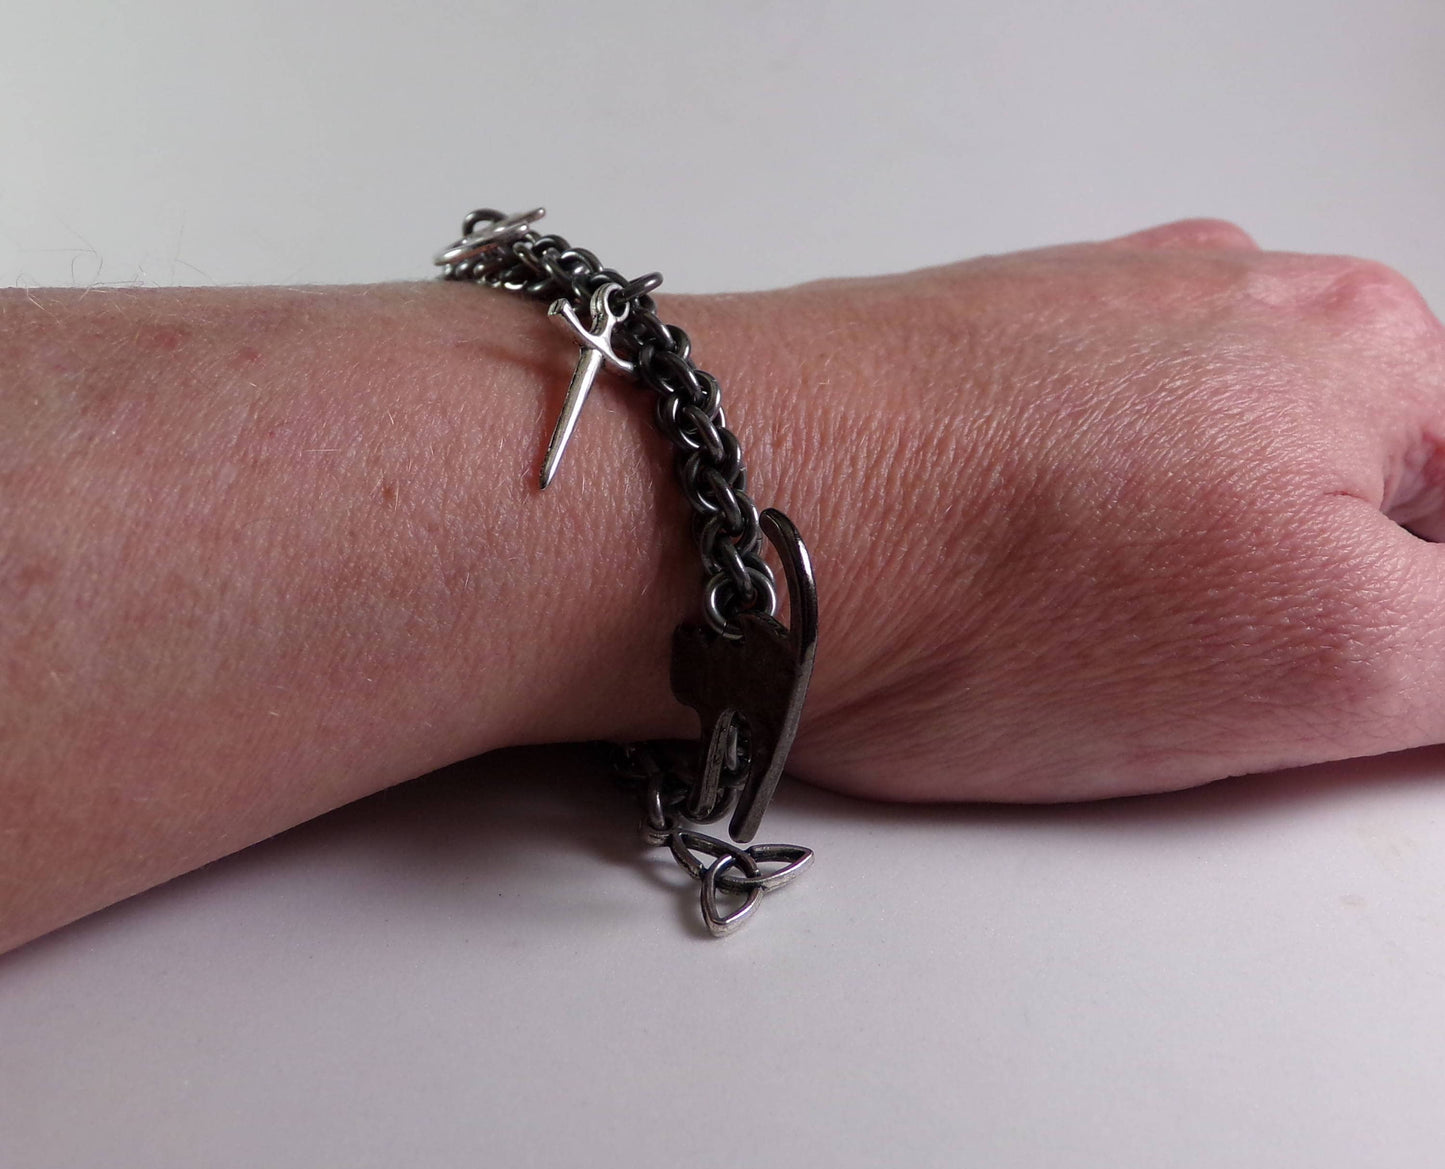 Wiccan Charm Bracelet - Wicca Jewelry - Pagan bracelet - Stainless Steel Chainmaille Bracelet - Pentagram Bracelet